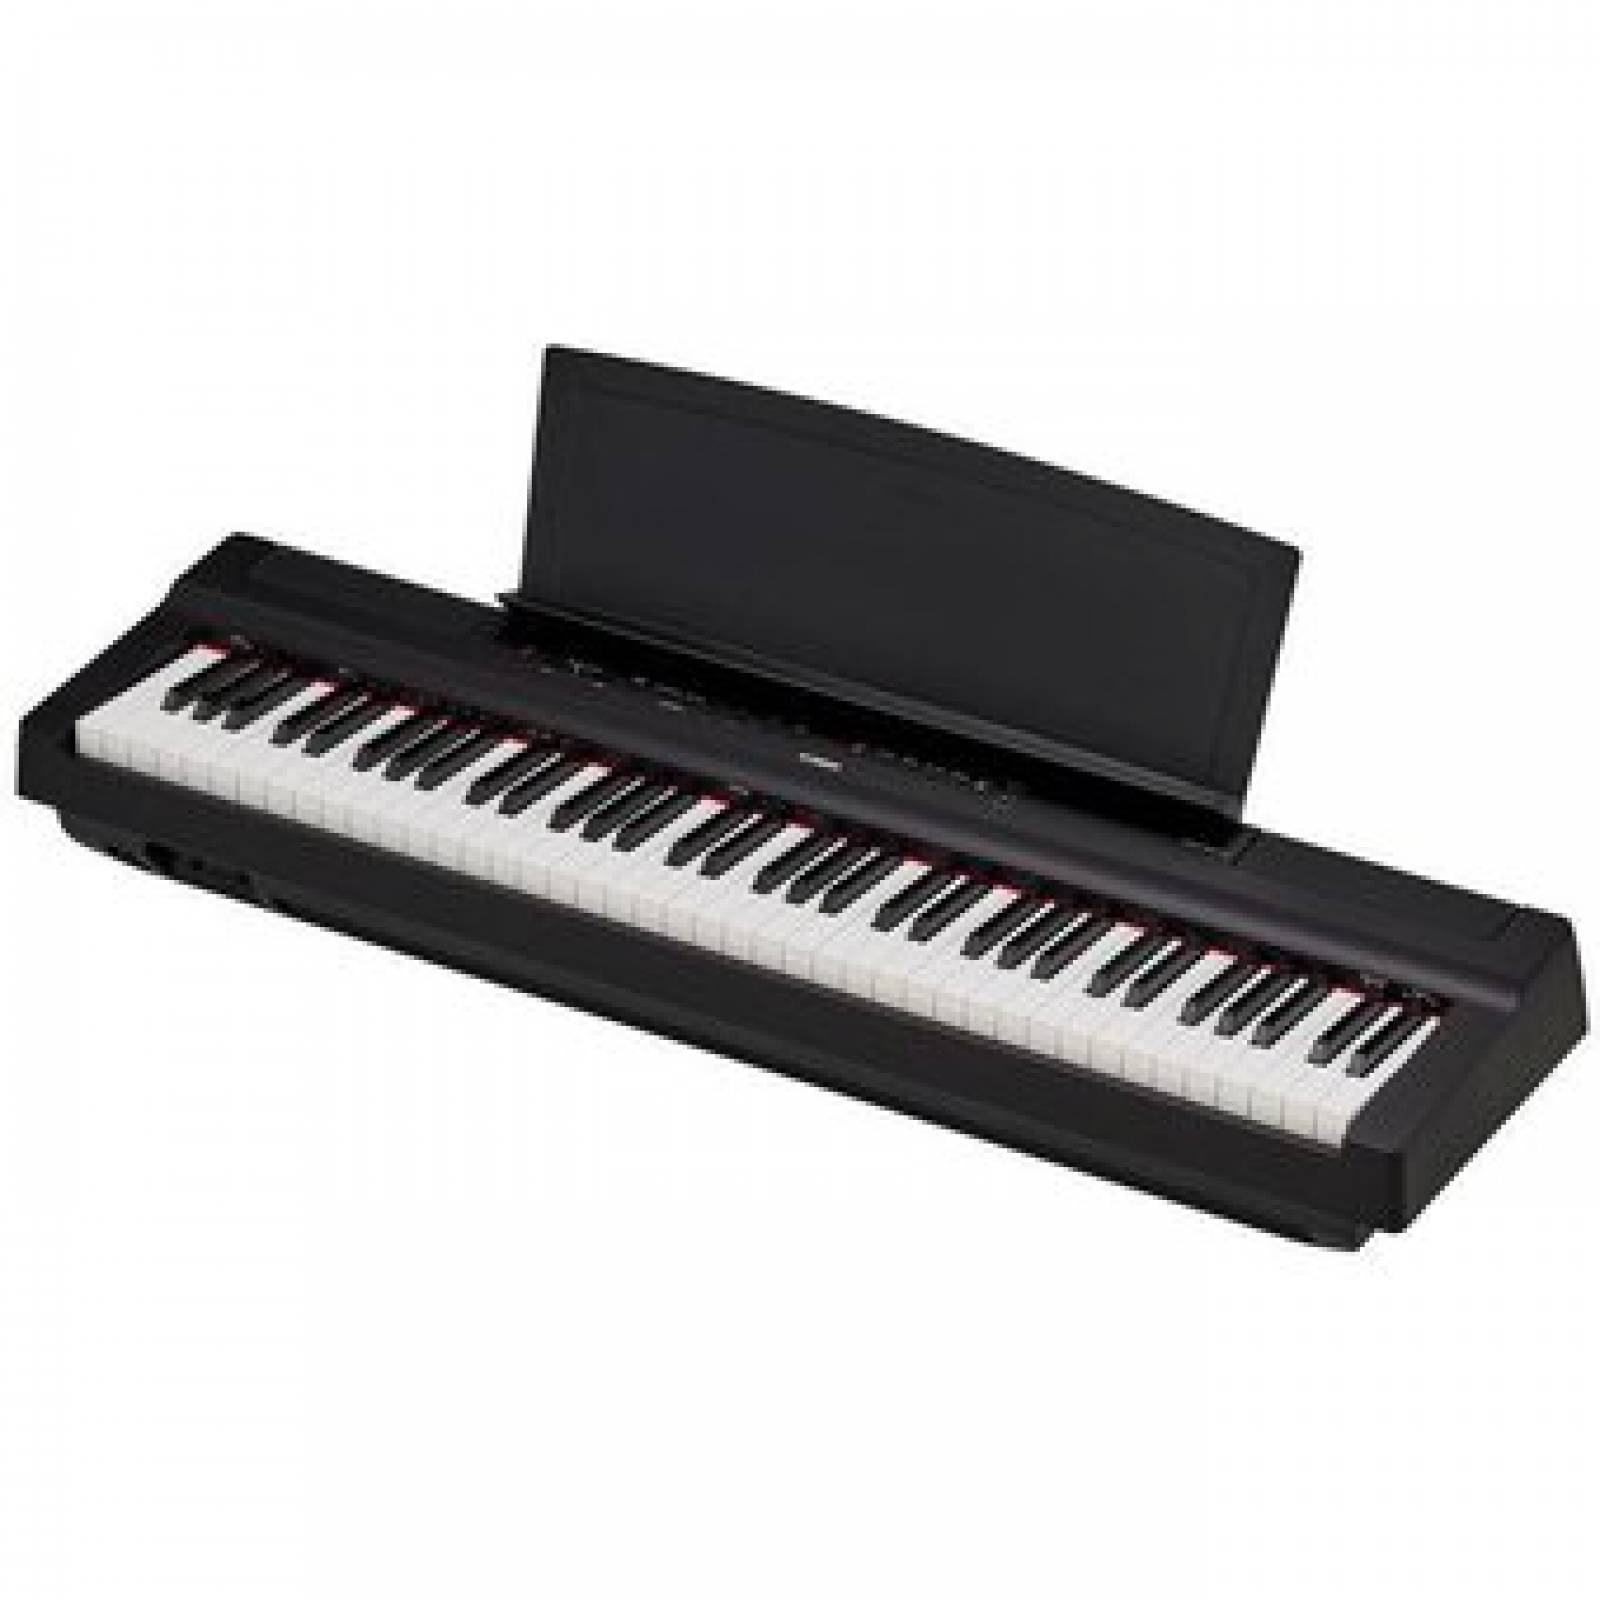 Yamaha P121 Piano Digital De 73 Teclas (negro) – Sonoritmo Audio  profesional e Intrumentos musicales